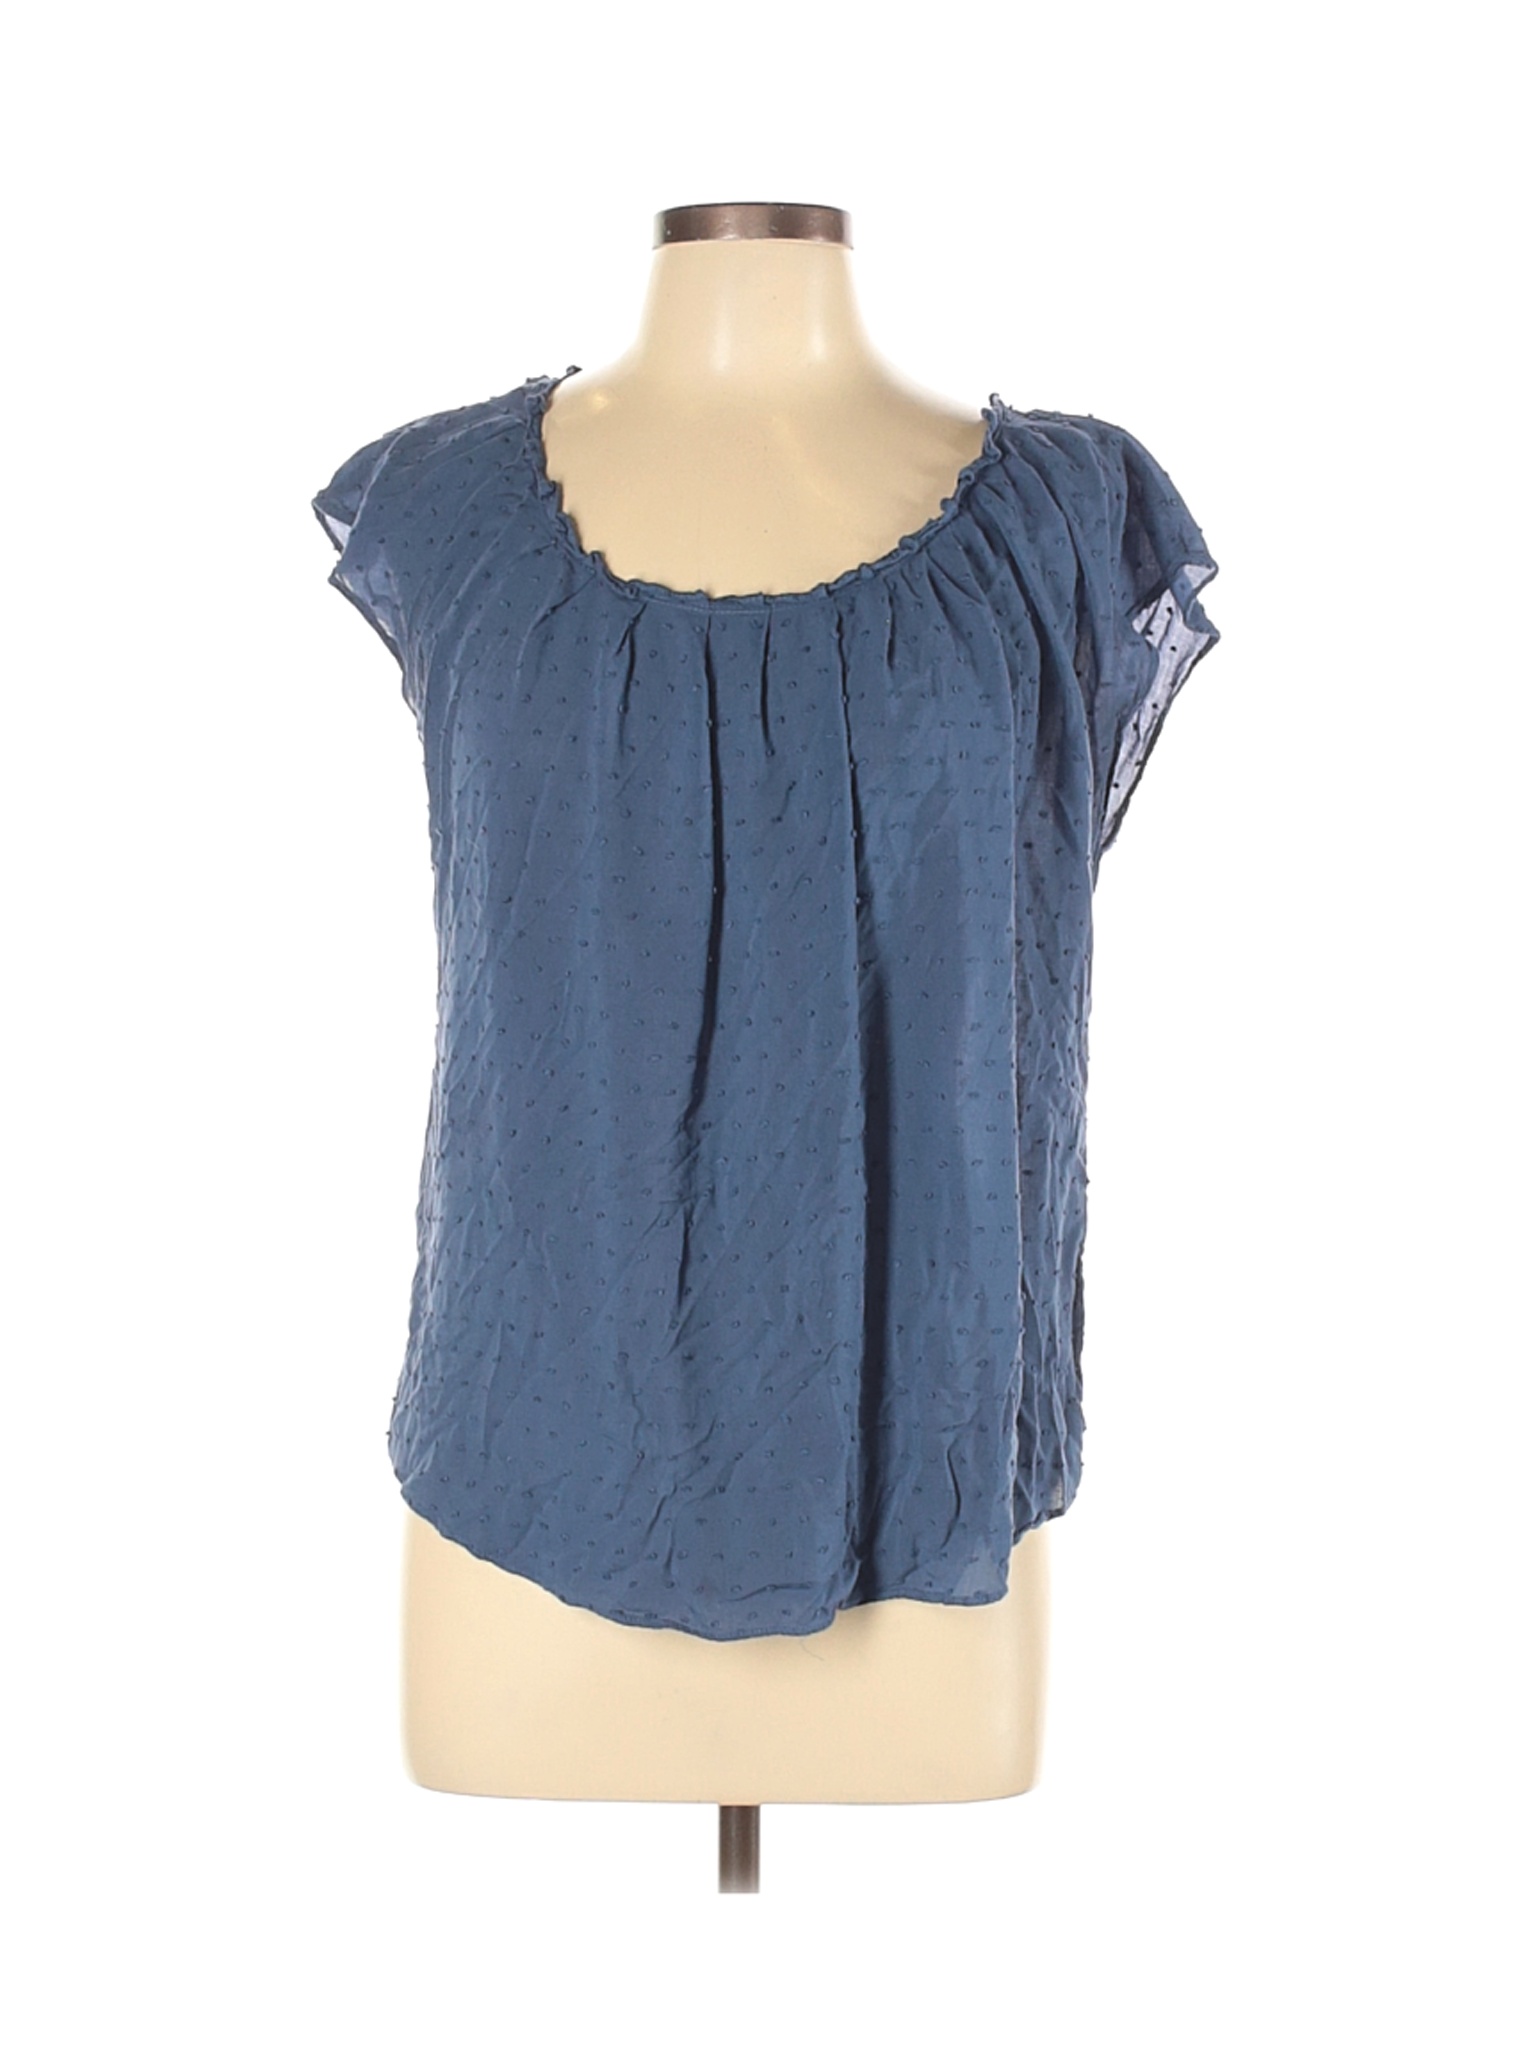 Lauren Conrad Women Blue Short Sleeve Top L | eBay